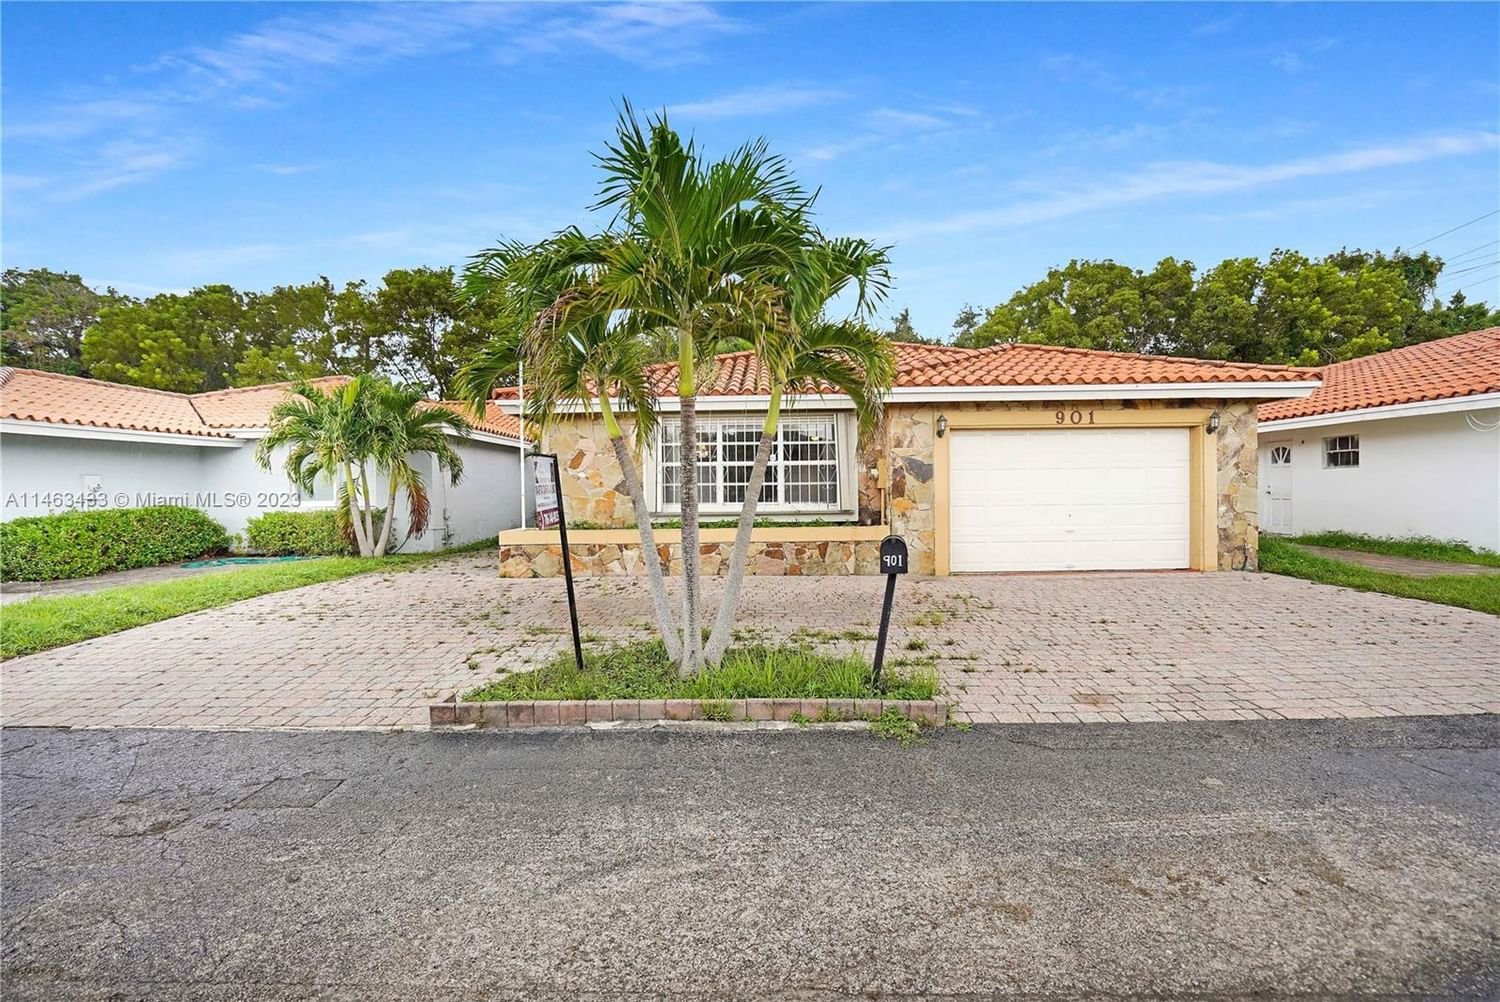 Real estate property located at 901 136th Pl, Miami-Dade County, TAMIAMI LAKES SEC 4, Miami, FL